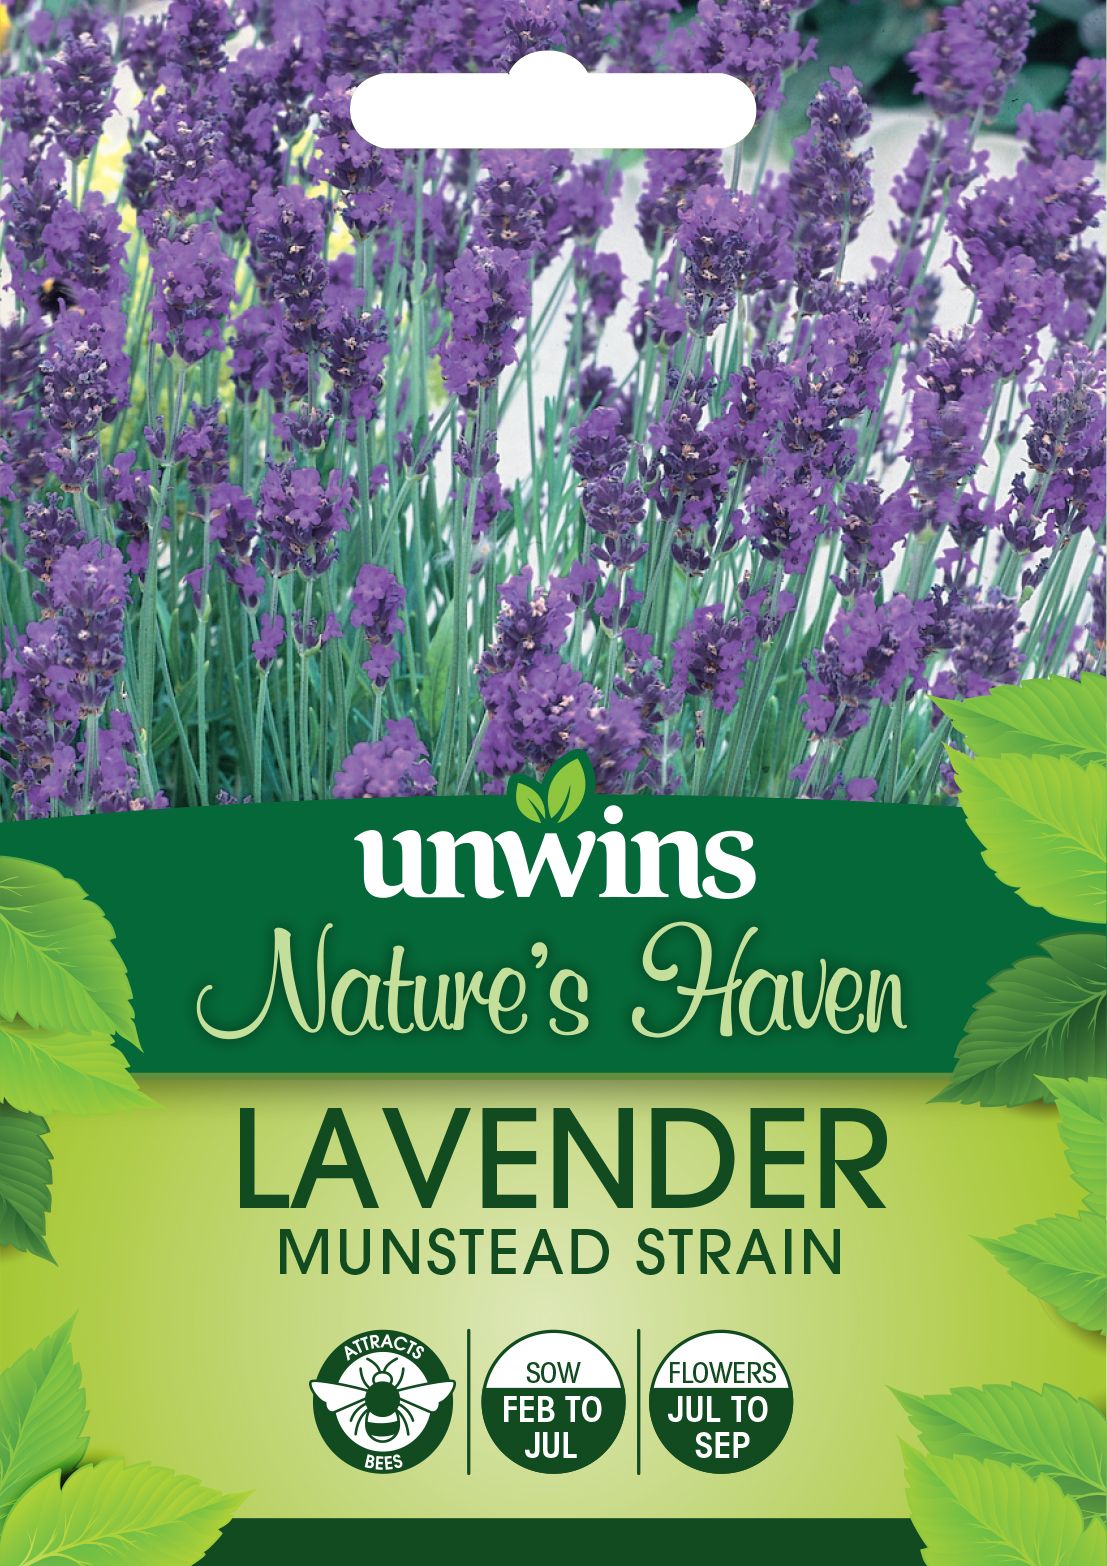 NH Lavender Munstead Strain